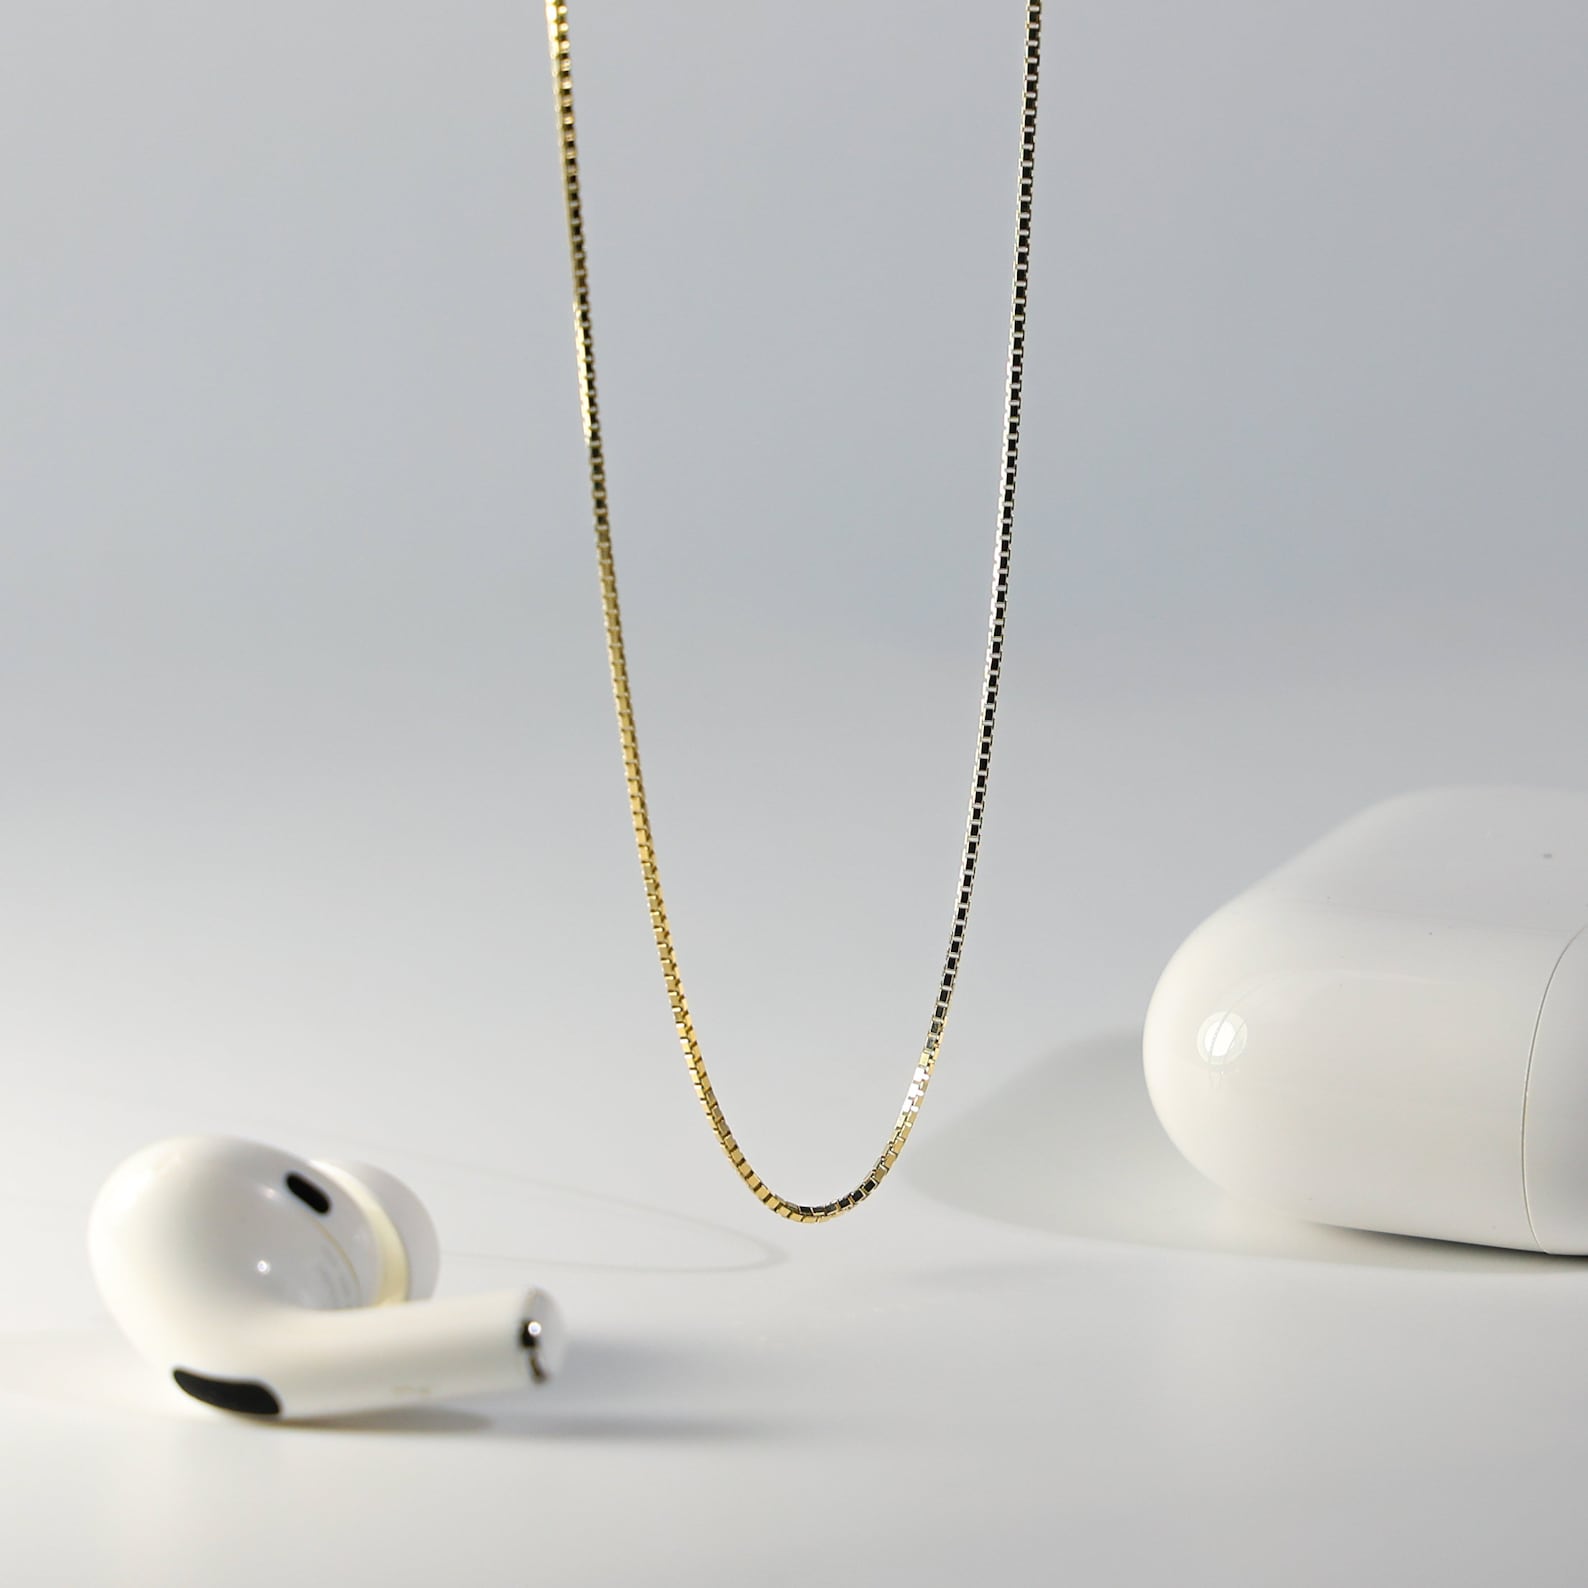 Gold Heart Locket Pendant Model-2040 - Charlie & Co. Jewelry